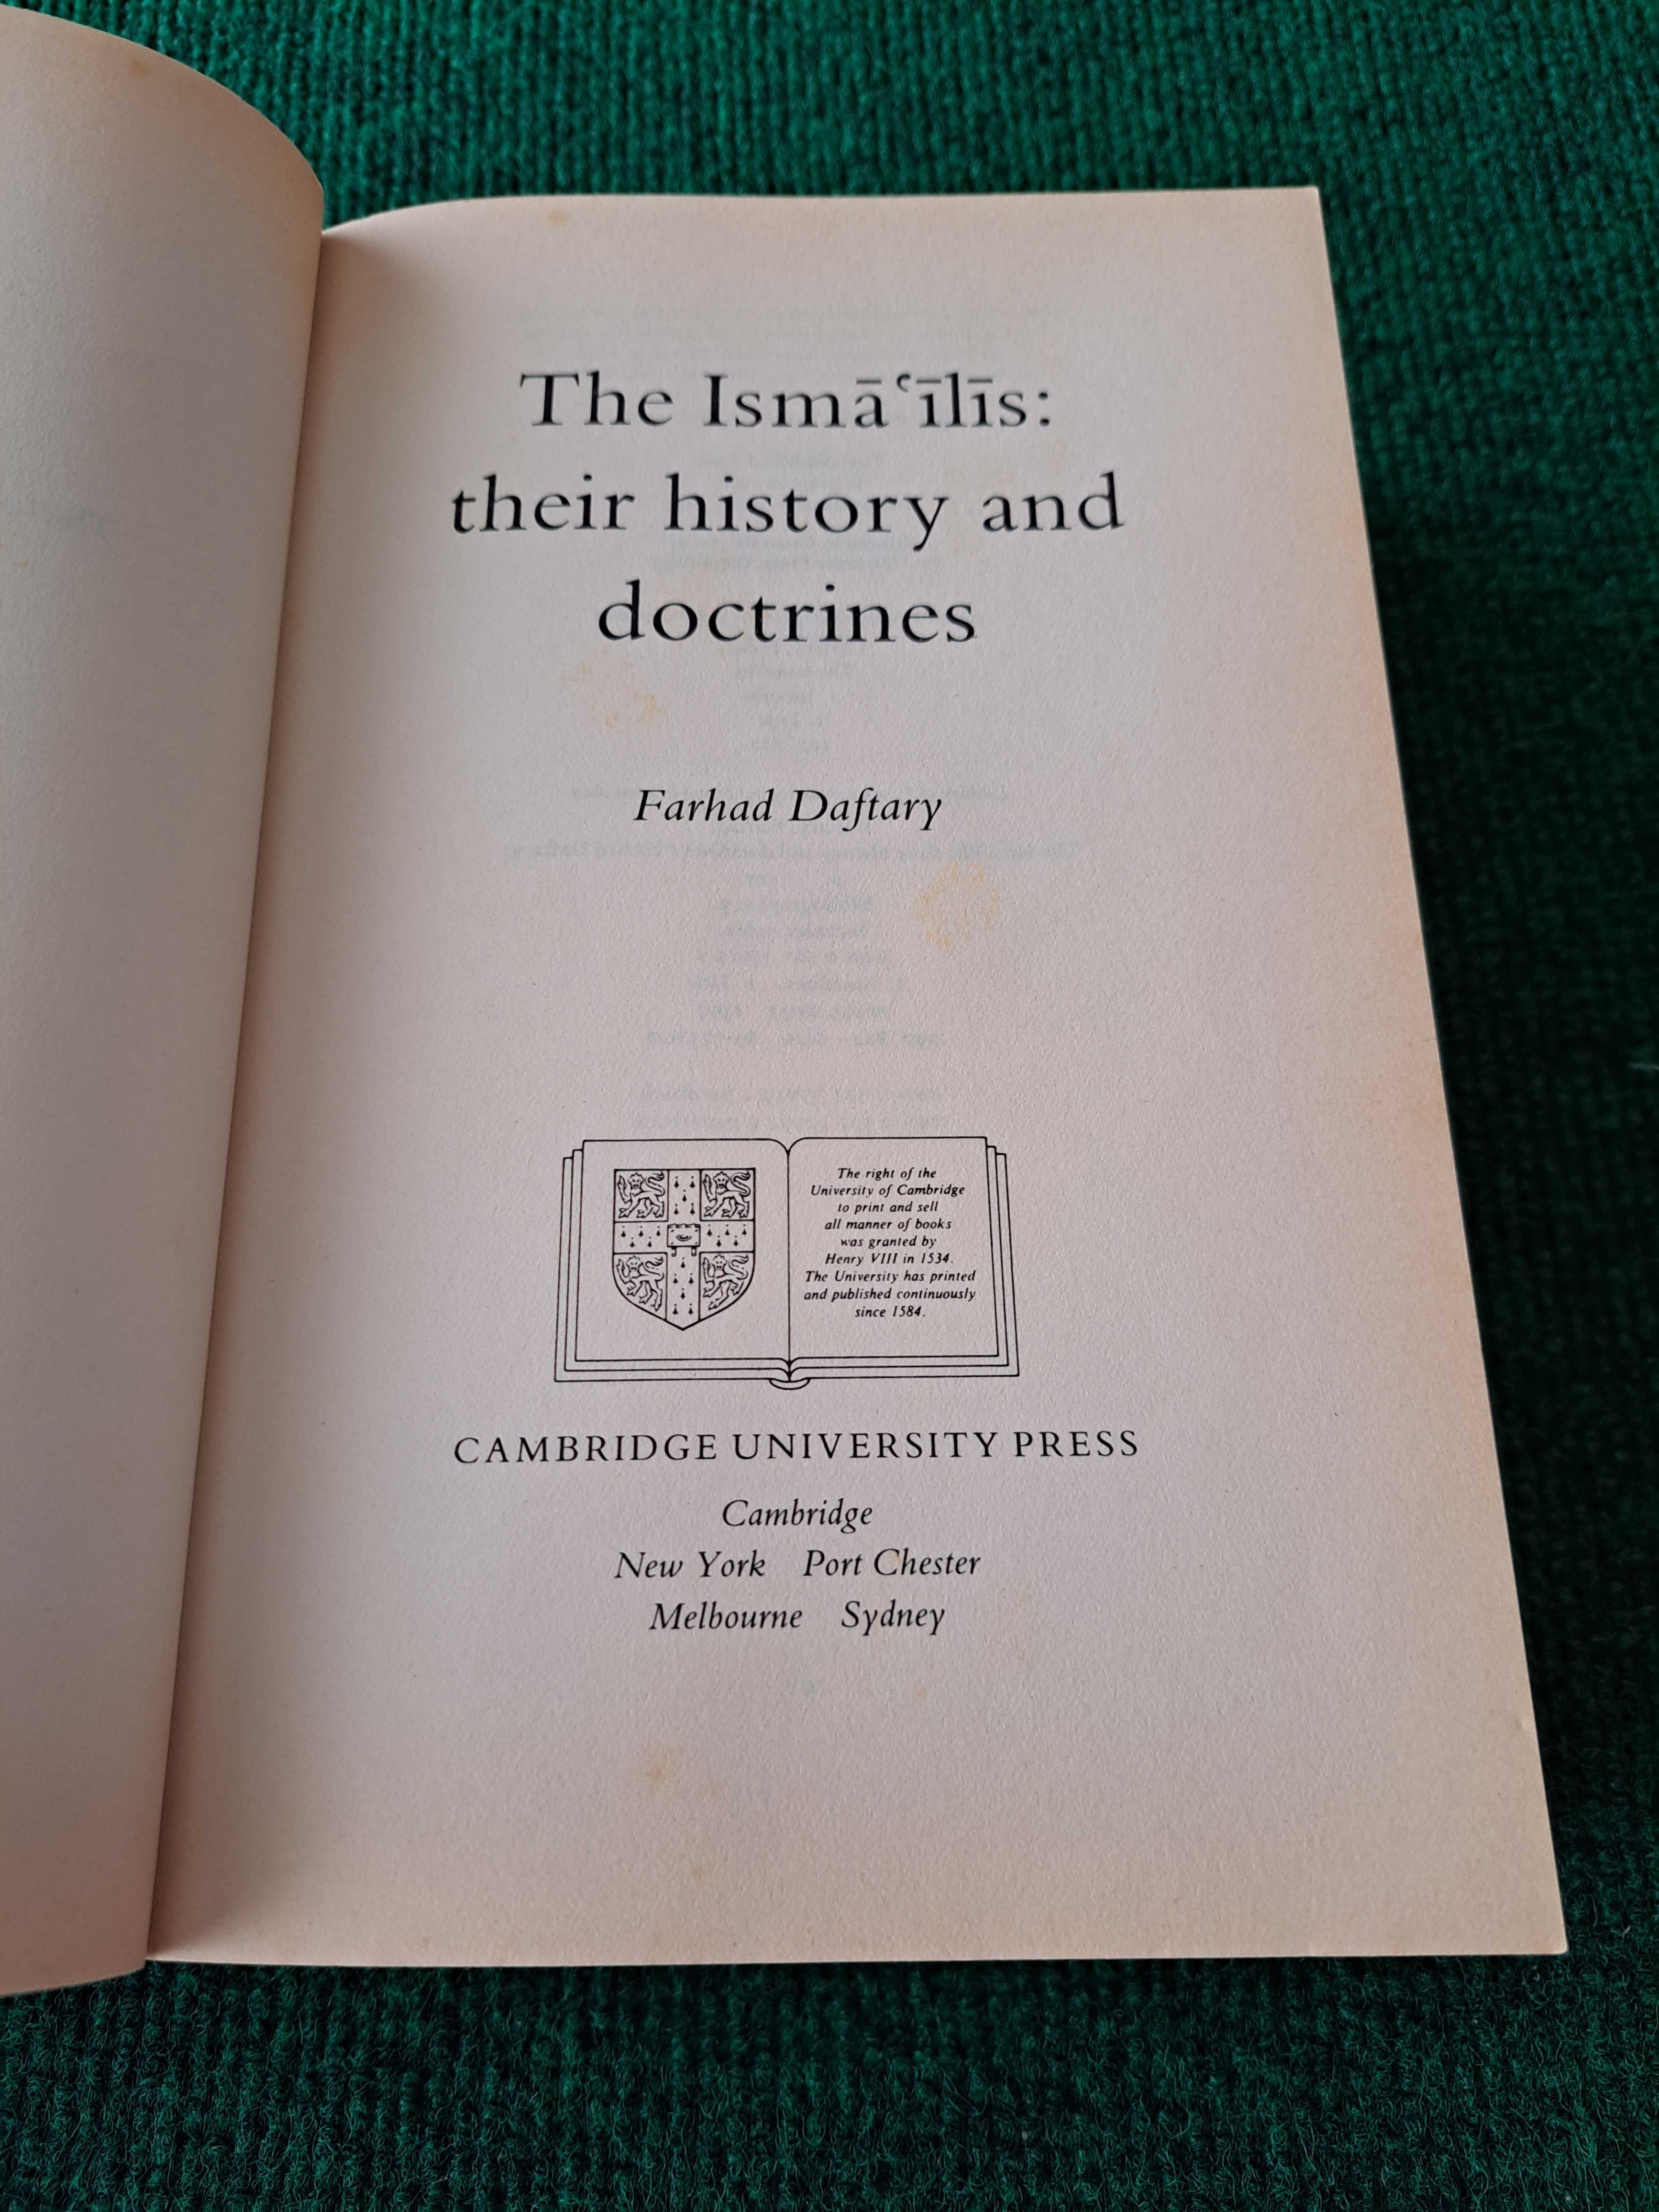 The Ismailis - Their history and doctrines - Farhad Daftary